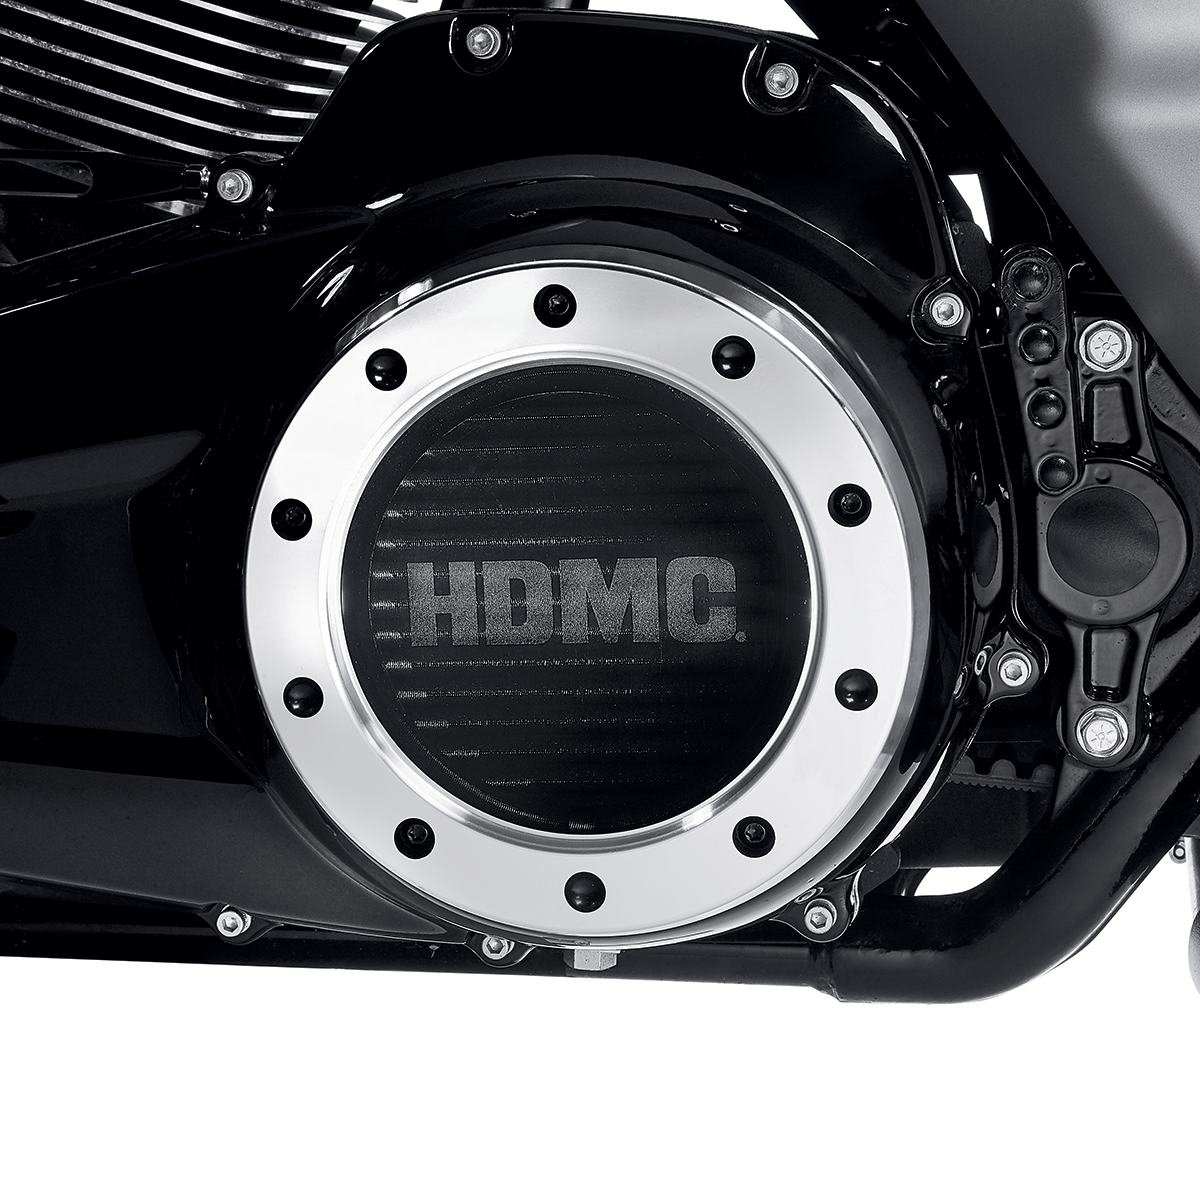 Harley-Davidson HDMC Derby Cover